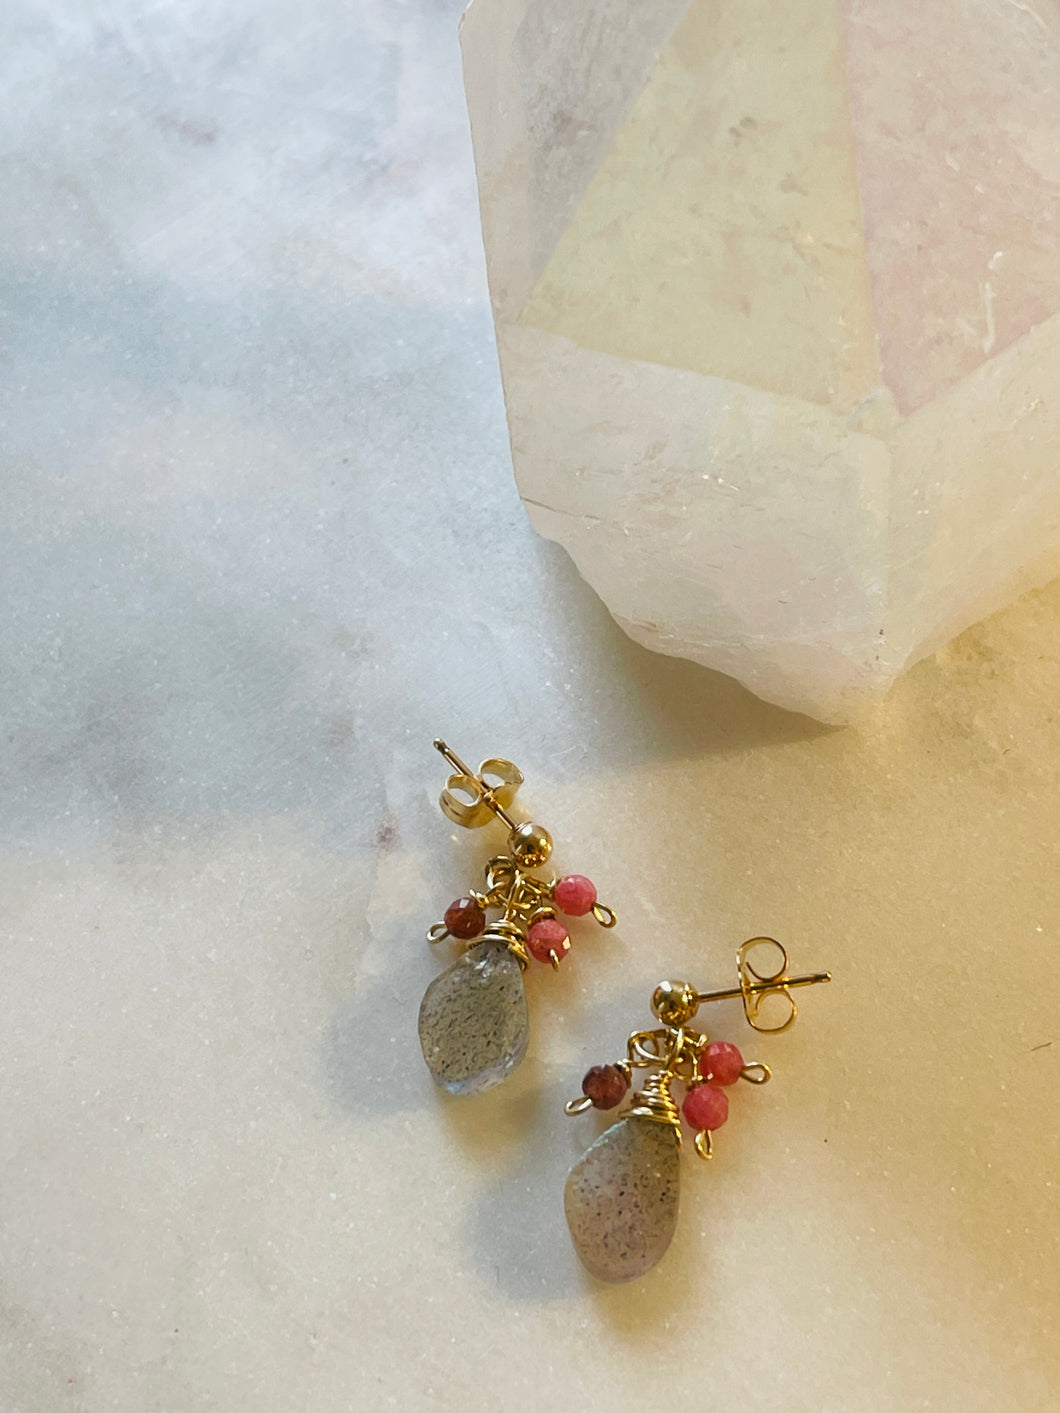 Spring Labradorite earrings